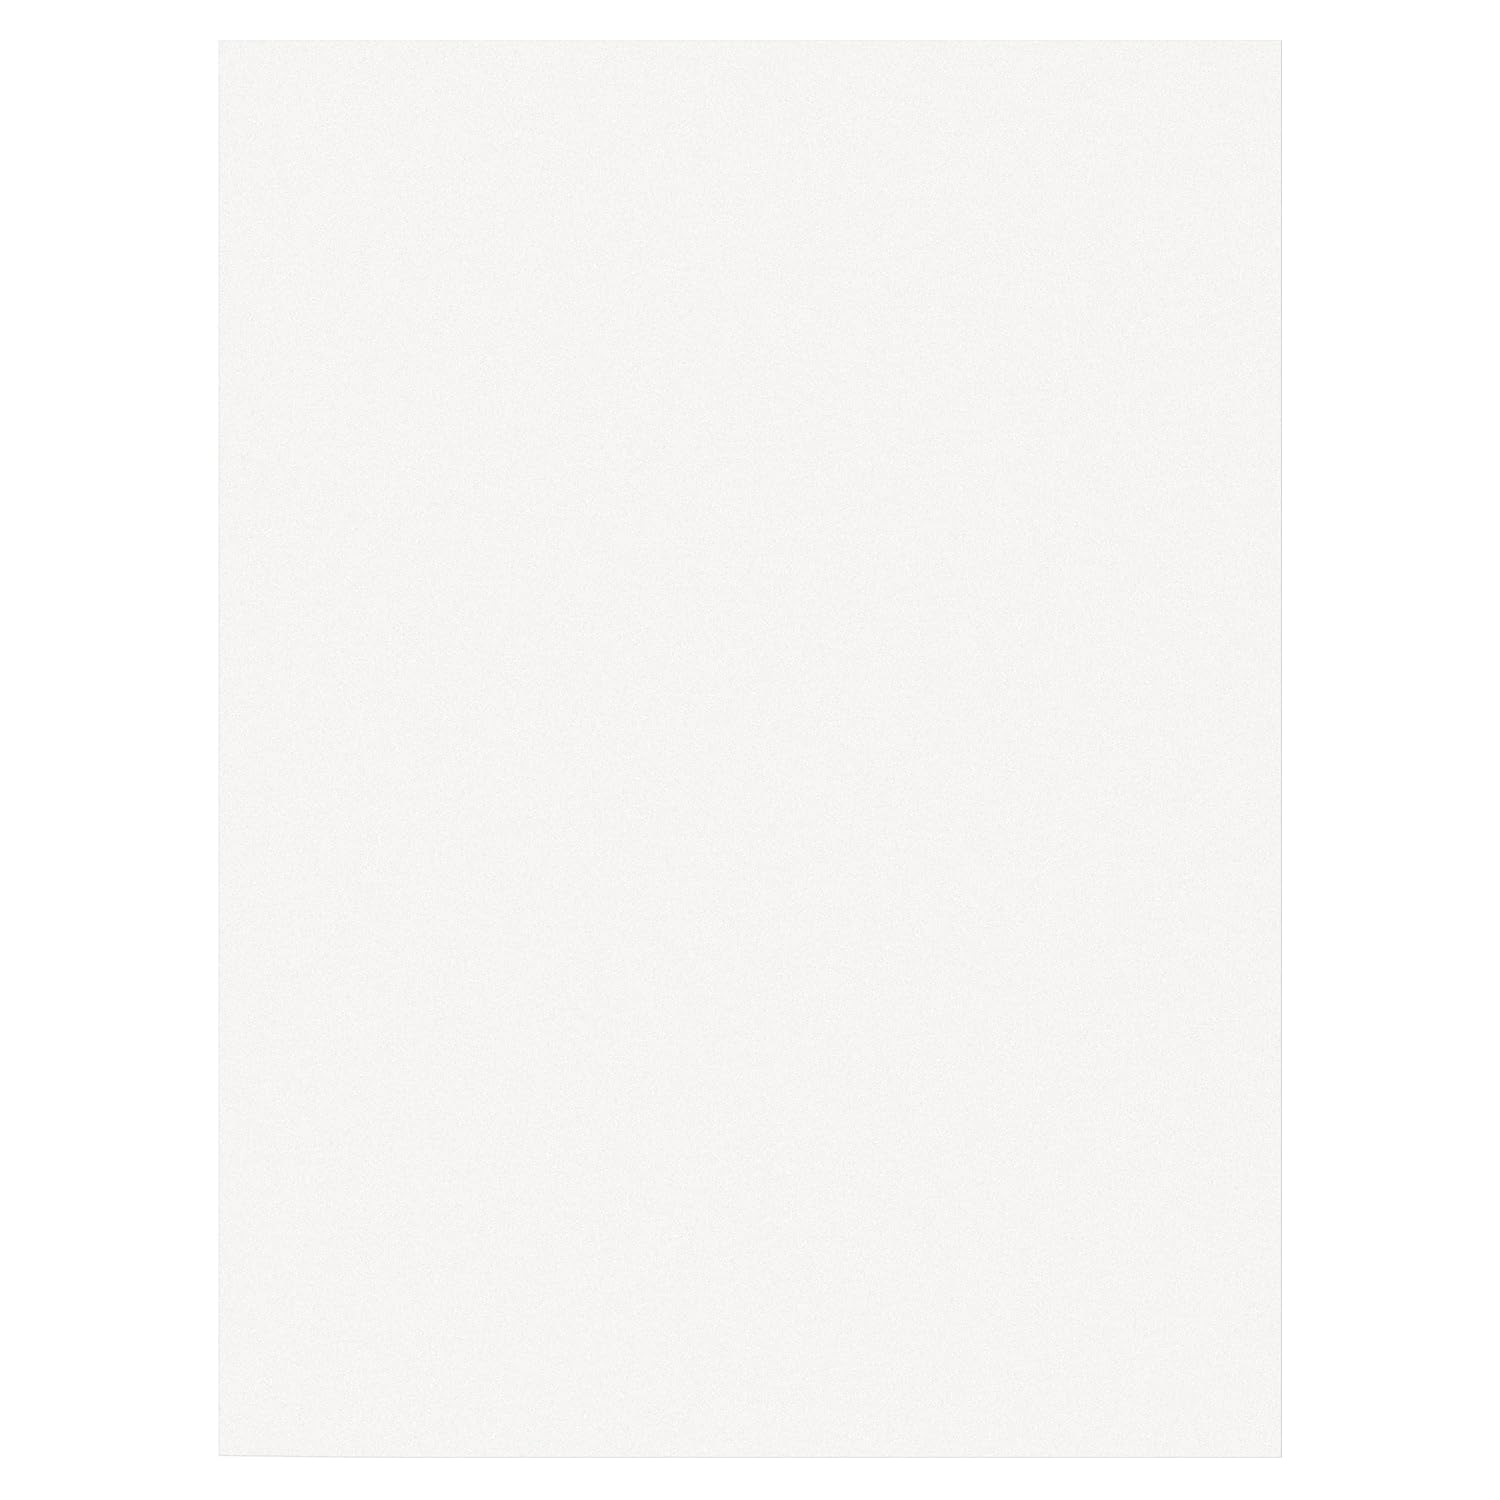 Prang (Formerly SunWorks) Construction Paper, White, 9" x 12", 50 Sheets